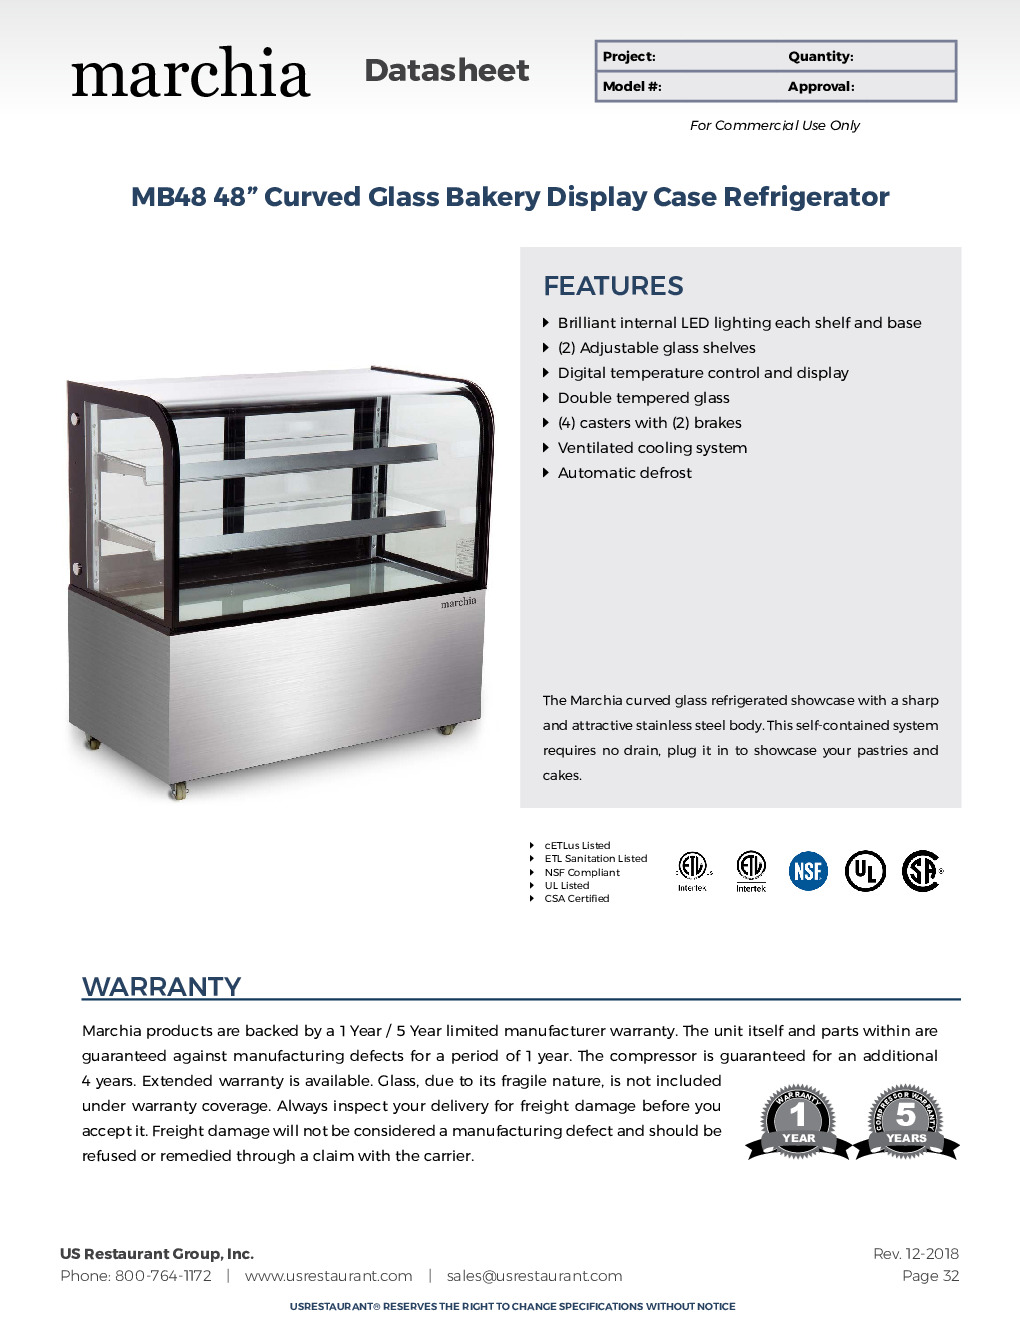 USR Brands MB48 Refrigerated Bakery Display Case